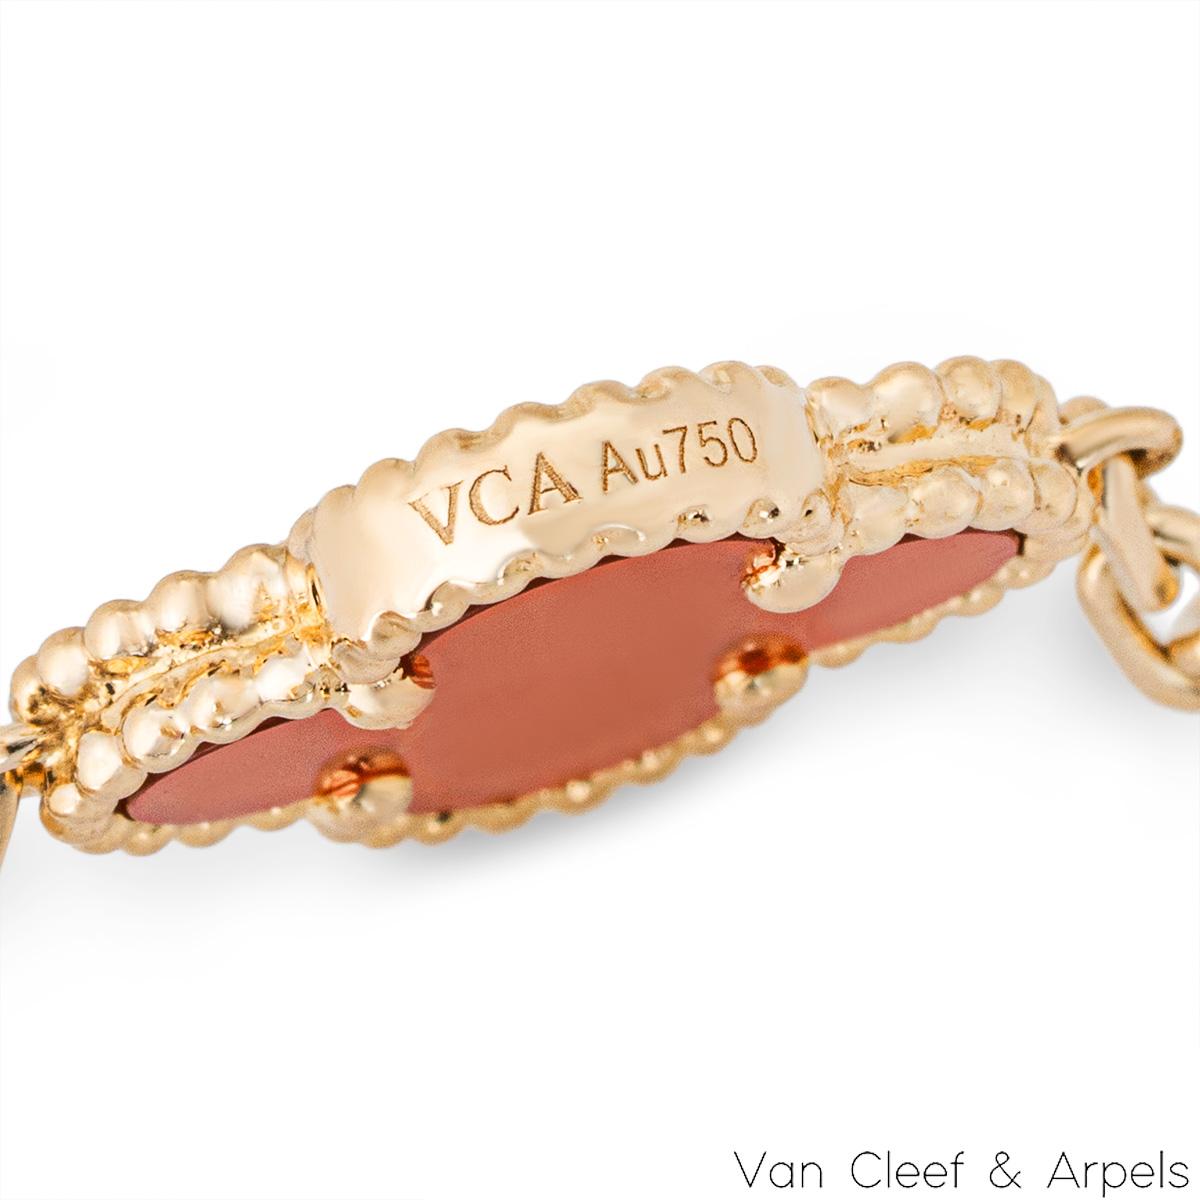  Van Cleef & Arpels Bracelet vintage Alhambra en or jaune et cornaline VCARD35500 Unisexe 